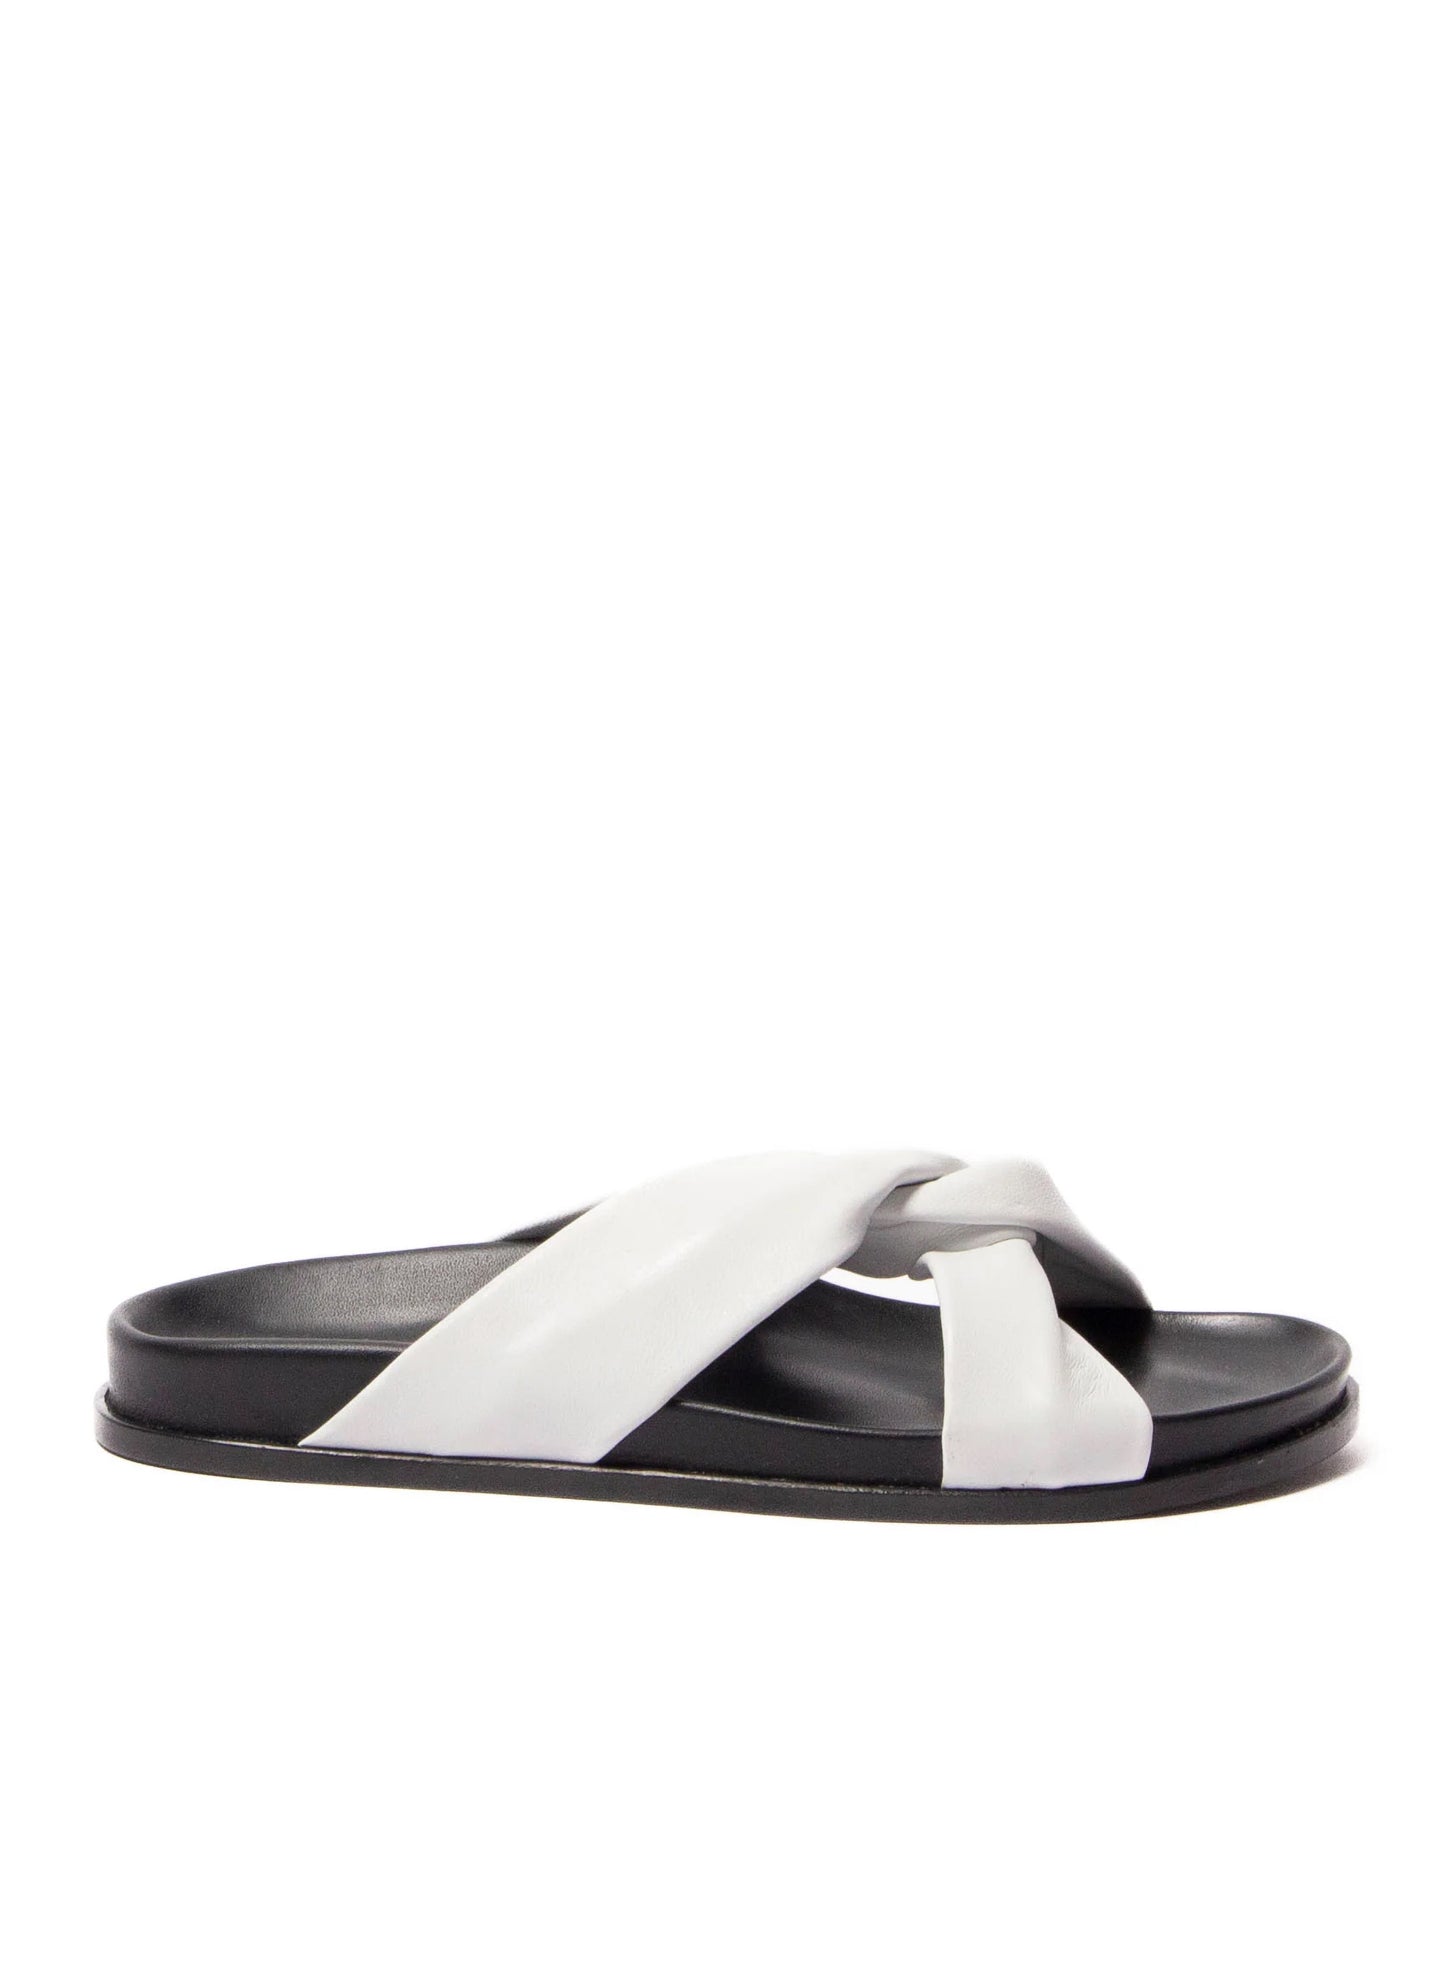 Tresse Sandal Noir/Blanc